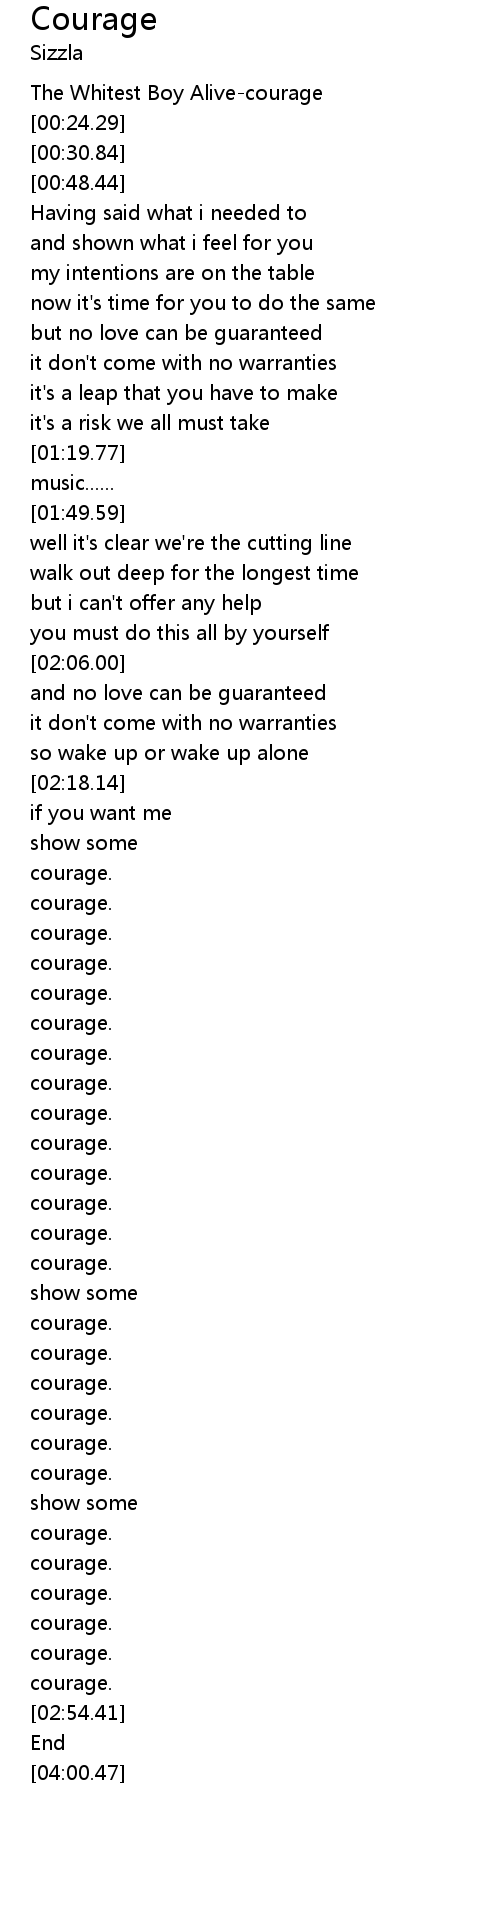 Courage Lyrics